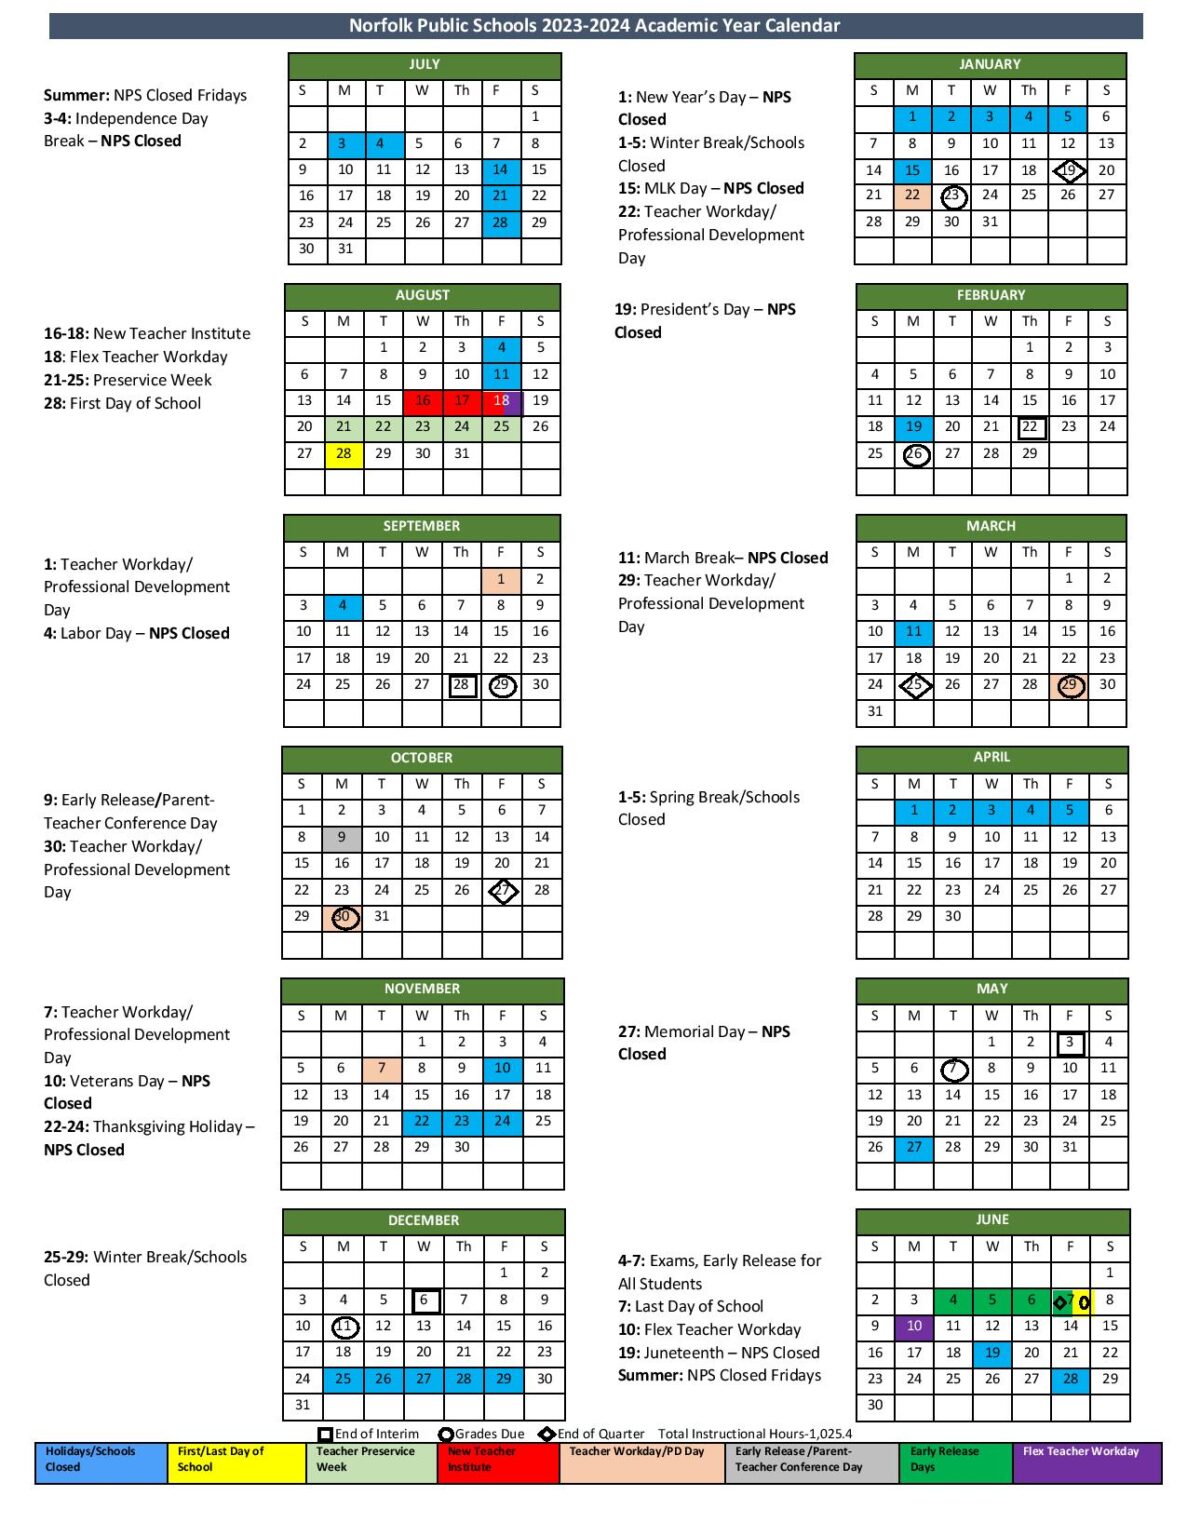 council-rock-calendar-2024-25-davine-theresina